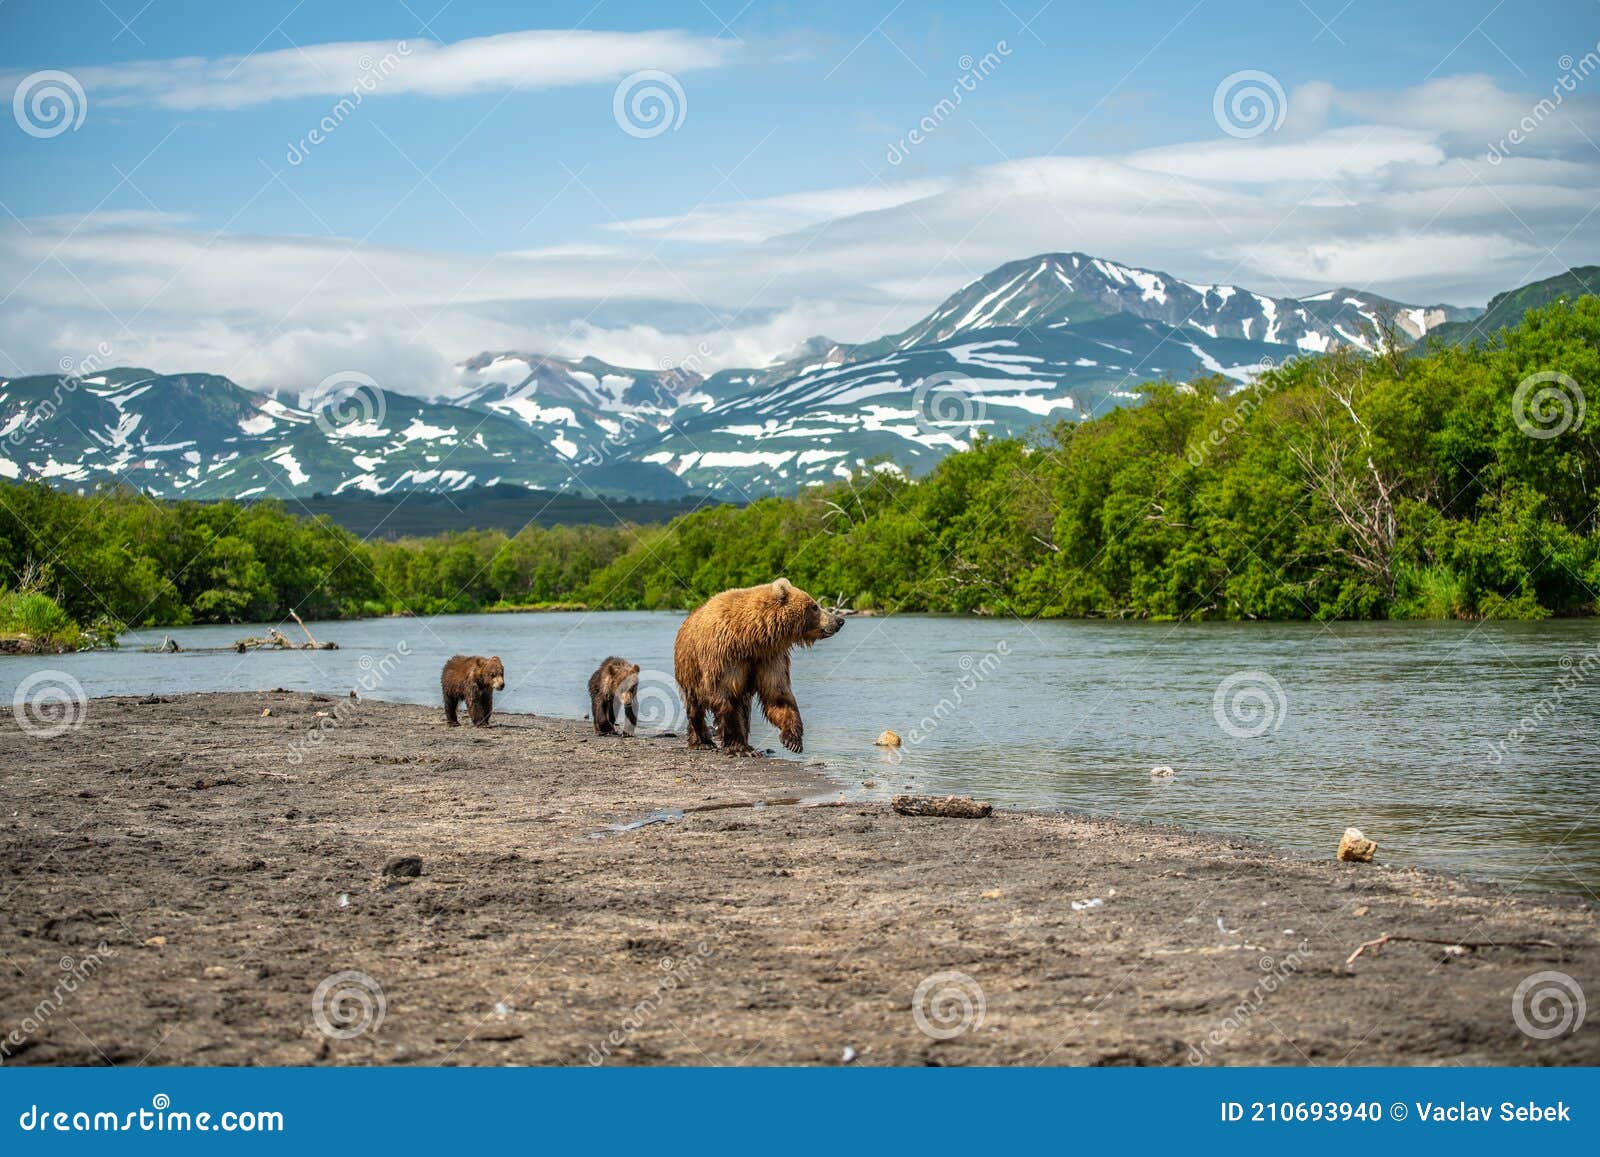 ruling the landscape, brown bears of kamchatka ursus arctos beringianus